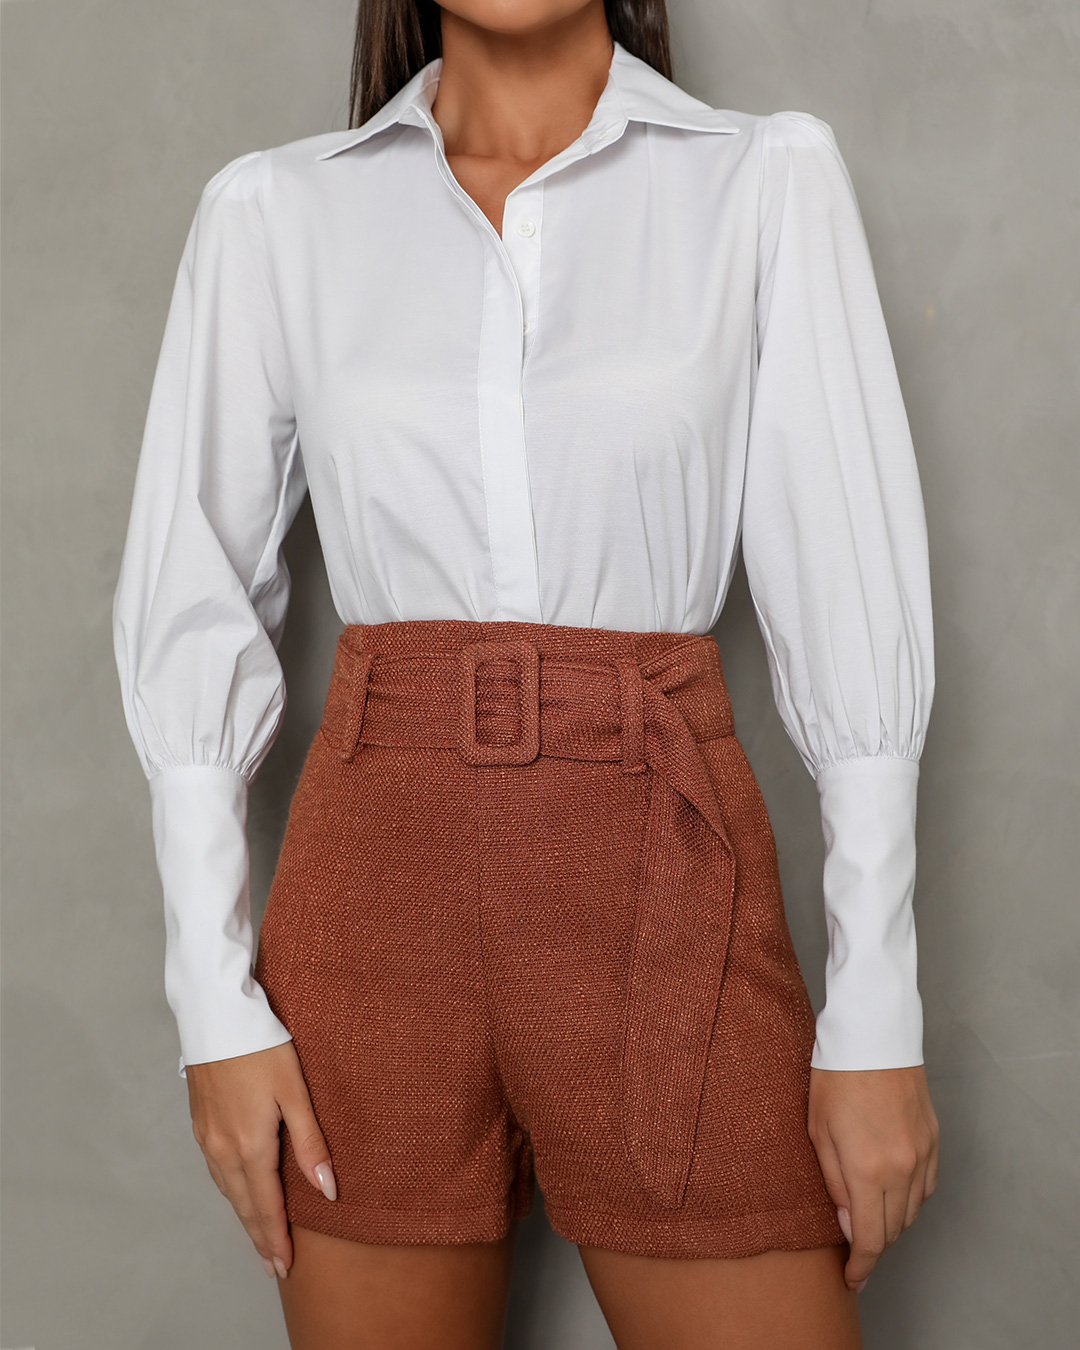 Dot Clothing - Shorts Dot Clothing Cintura Alta Marrom - 1607MARR